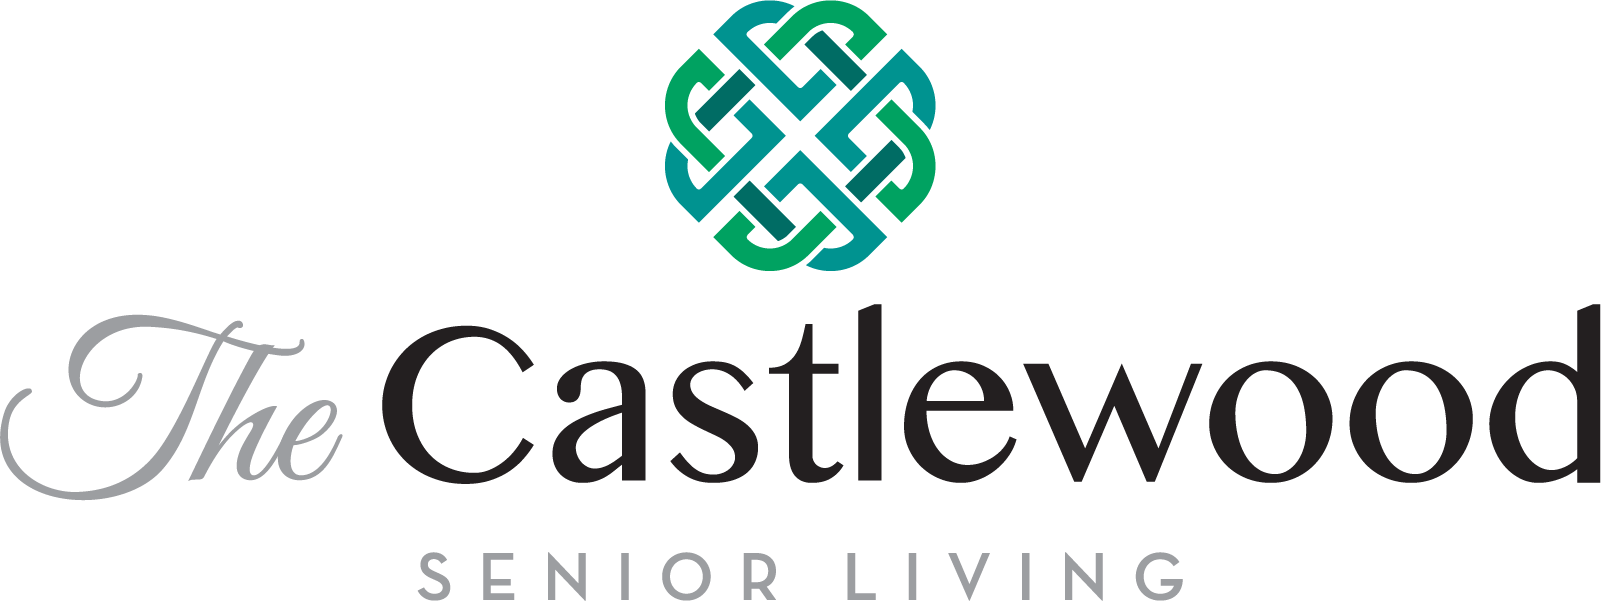 The Castlewood Senior Living